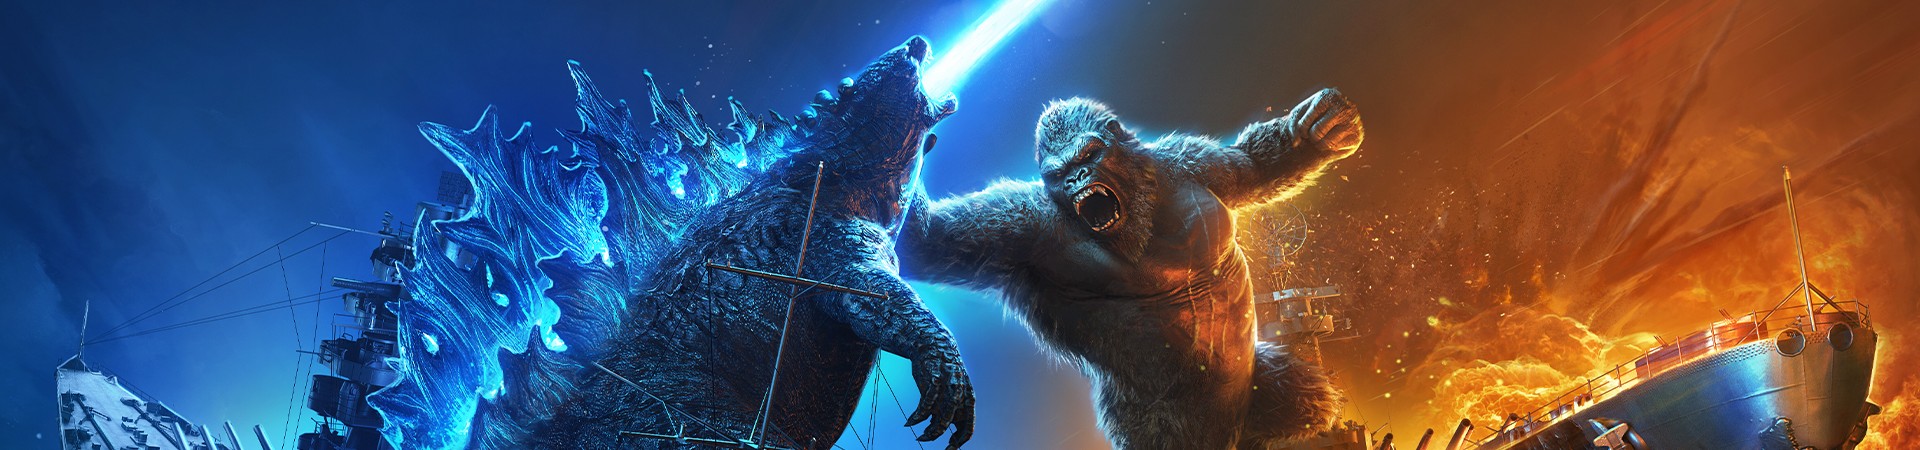 Godzilla vs Kong: Disfruta la película interactiva en PUBG Mobile